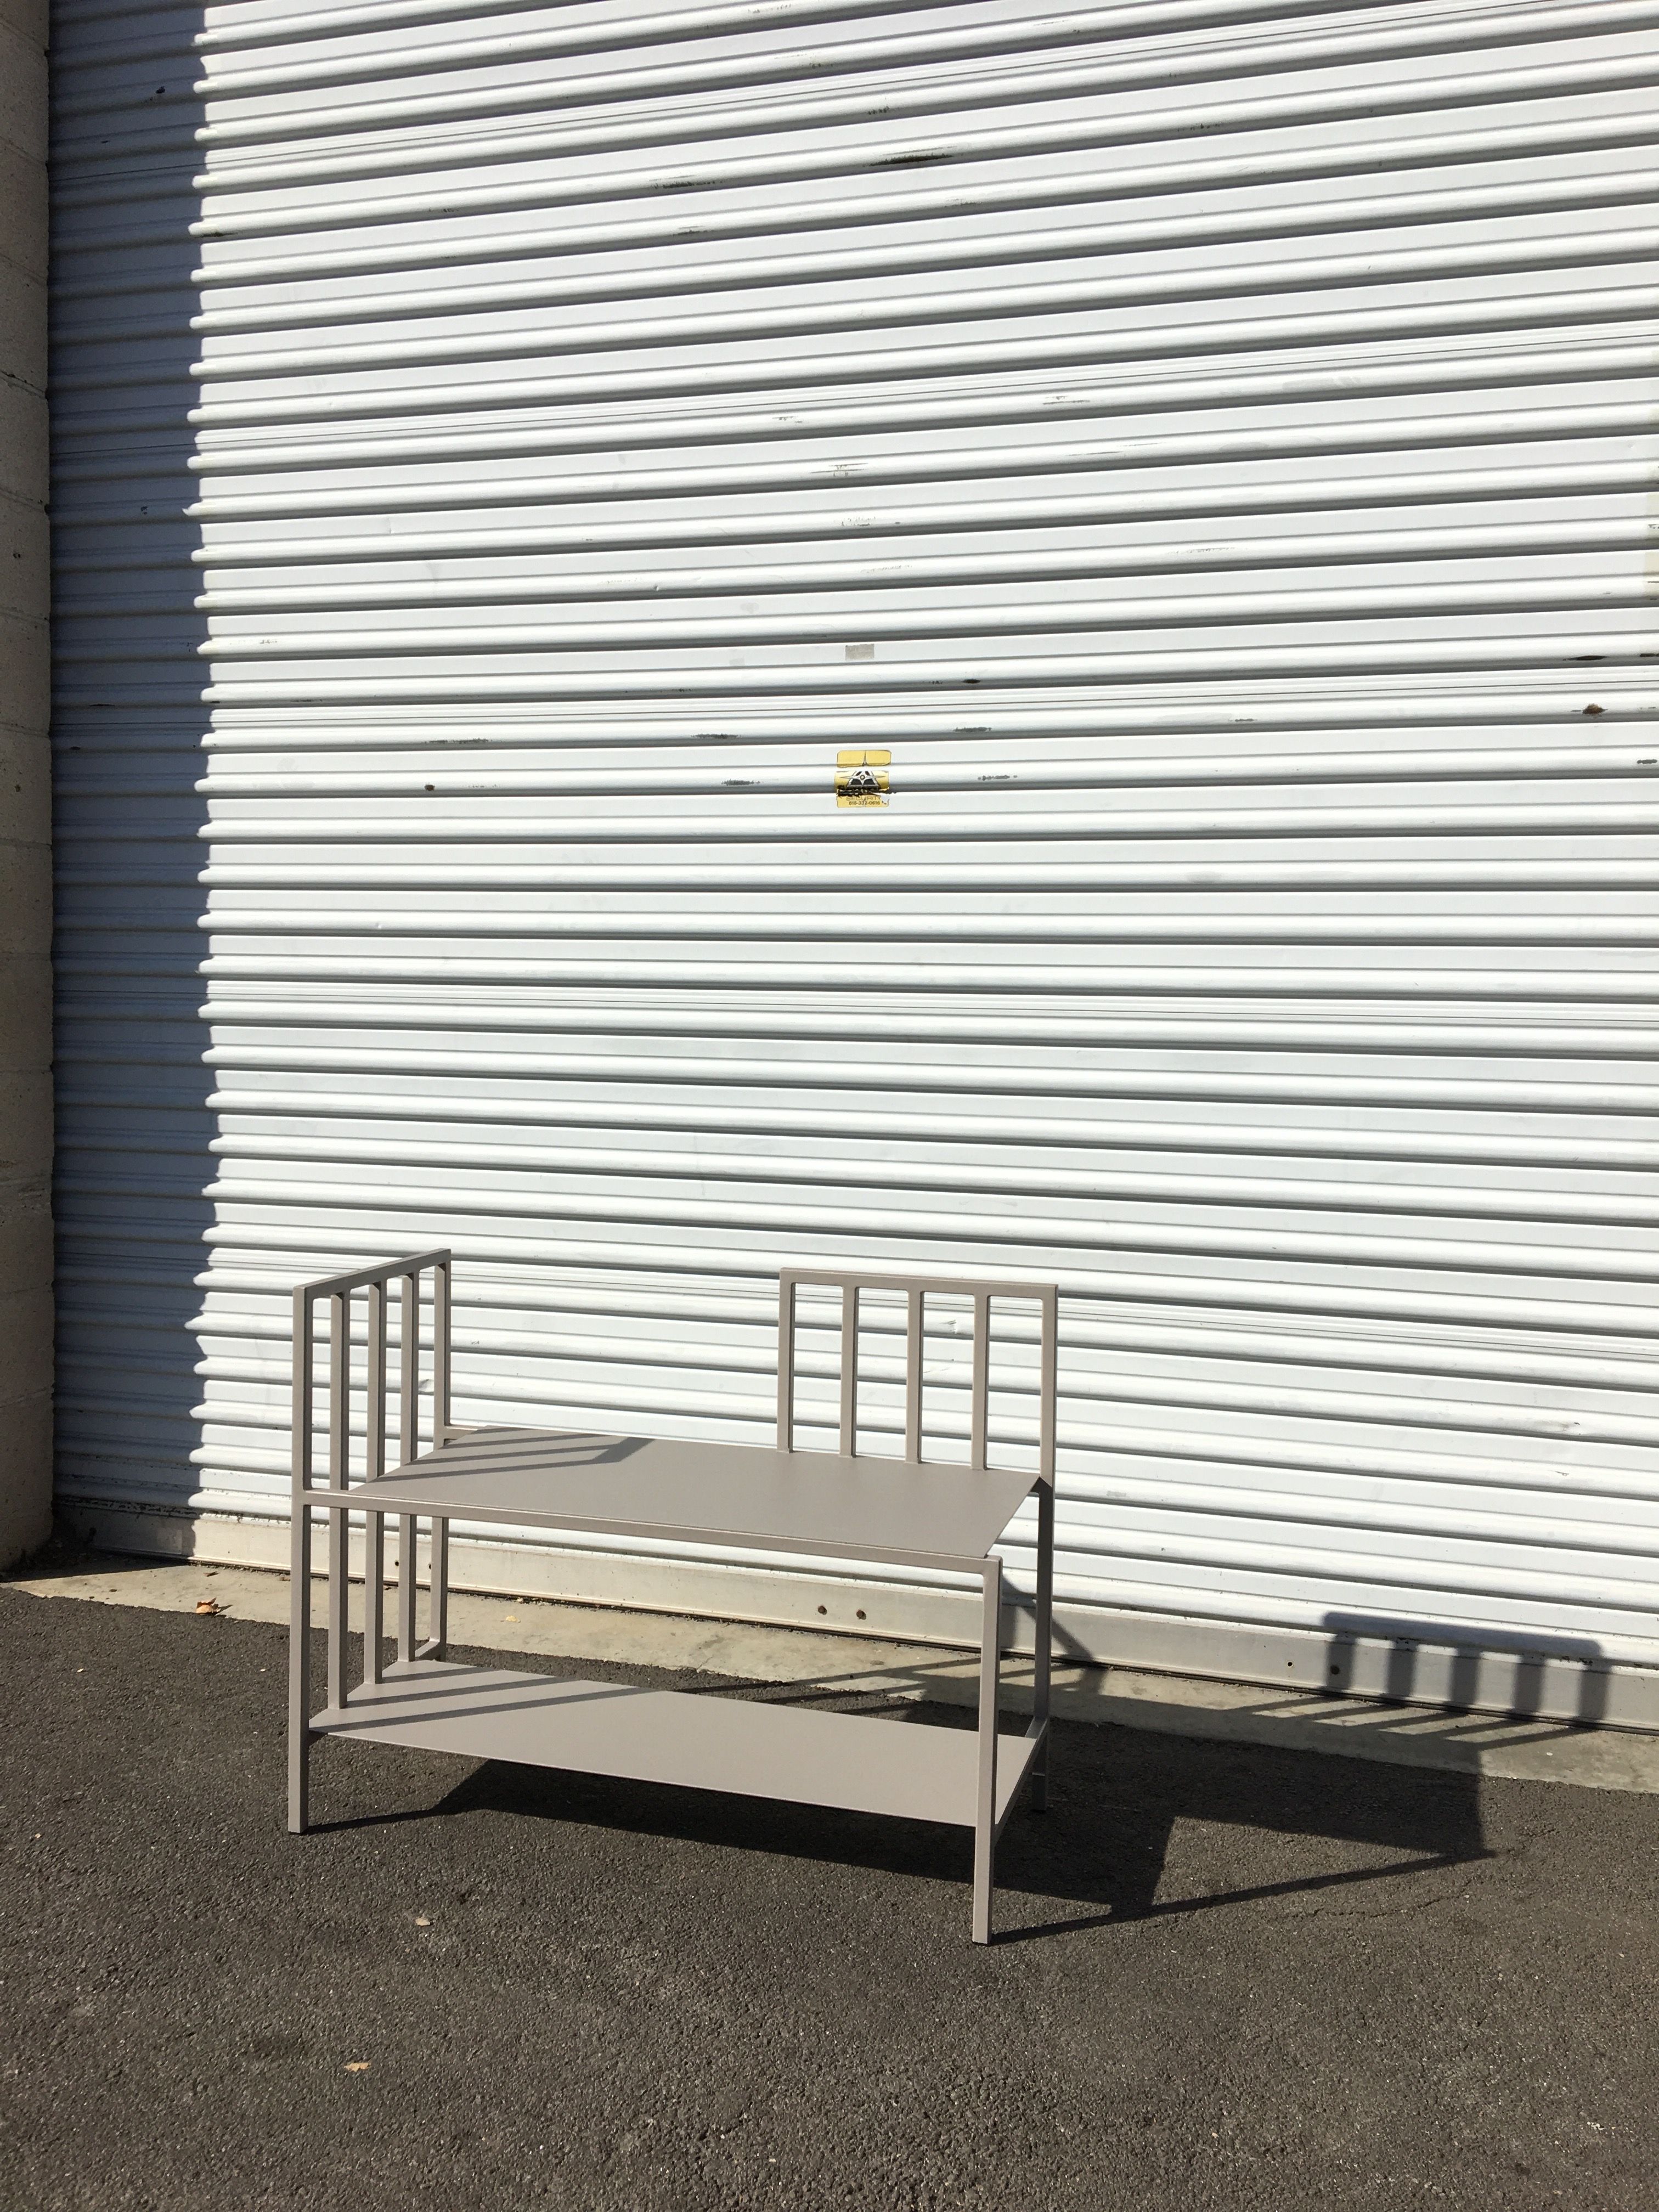  Display Benches - Baserange Kyoto product image 5